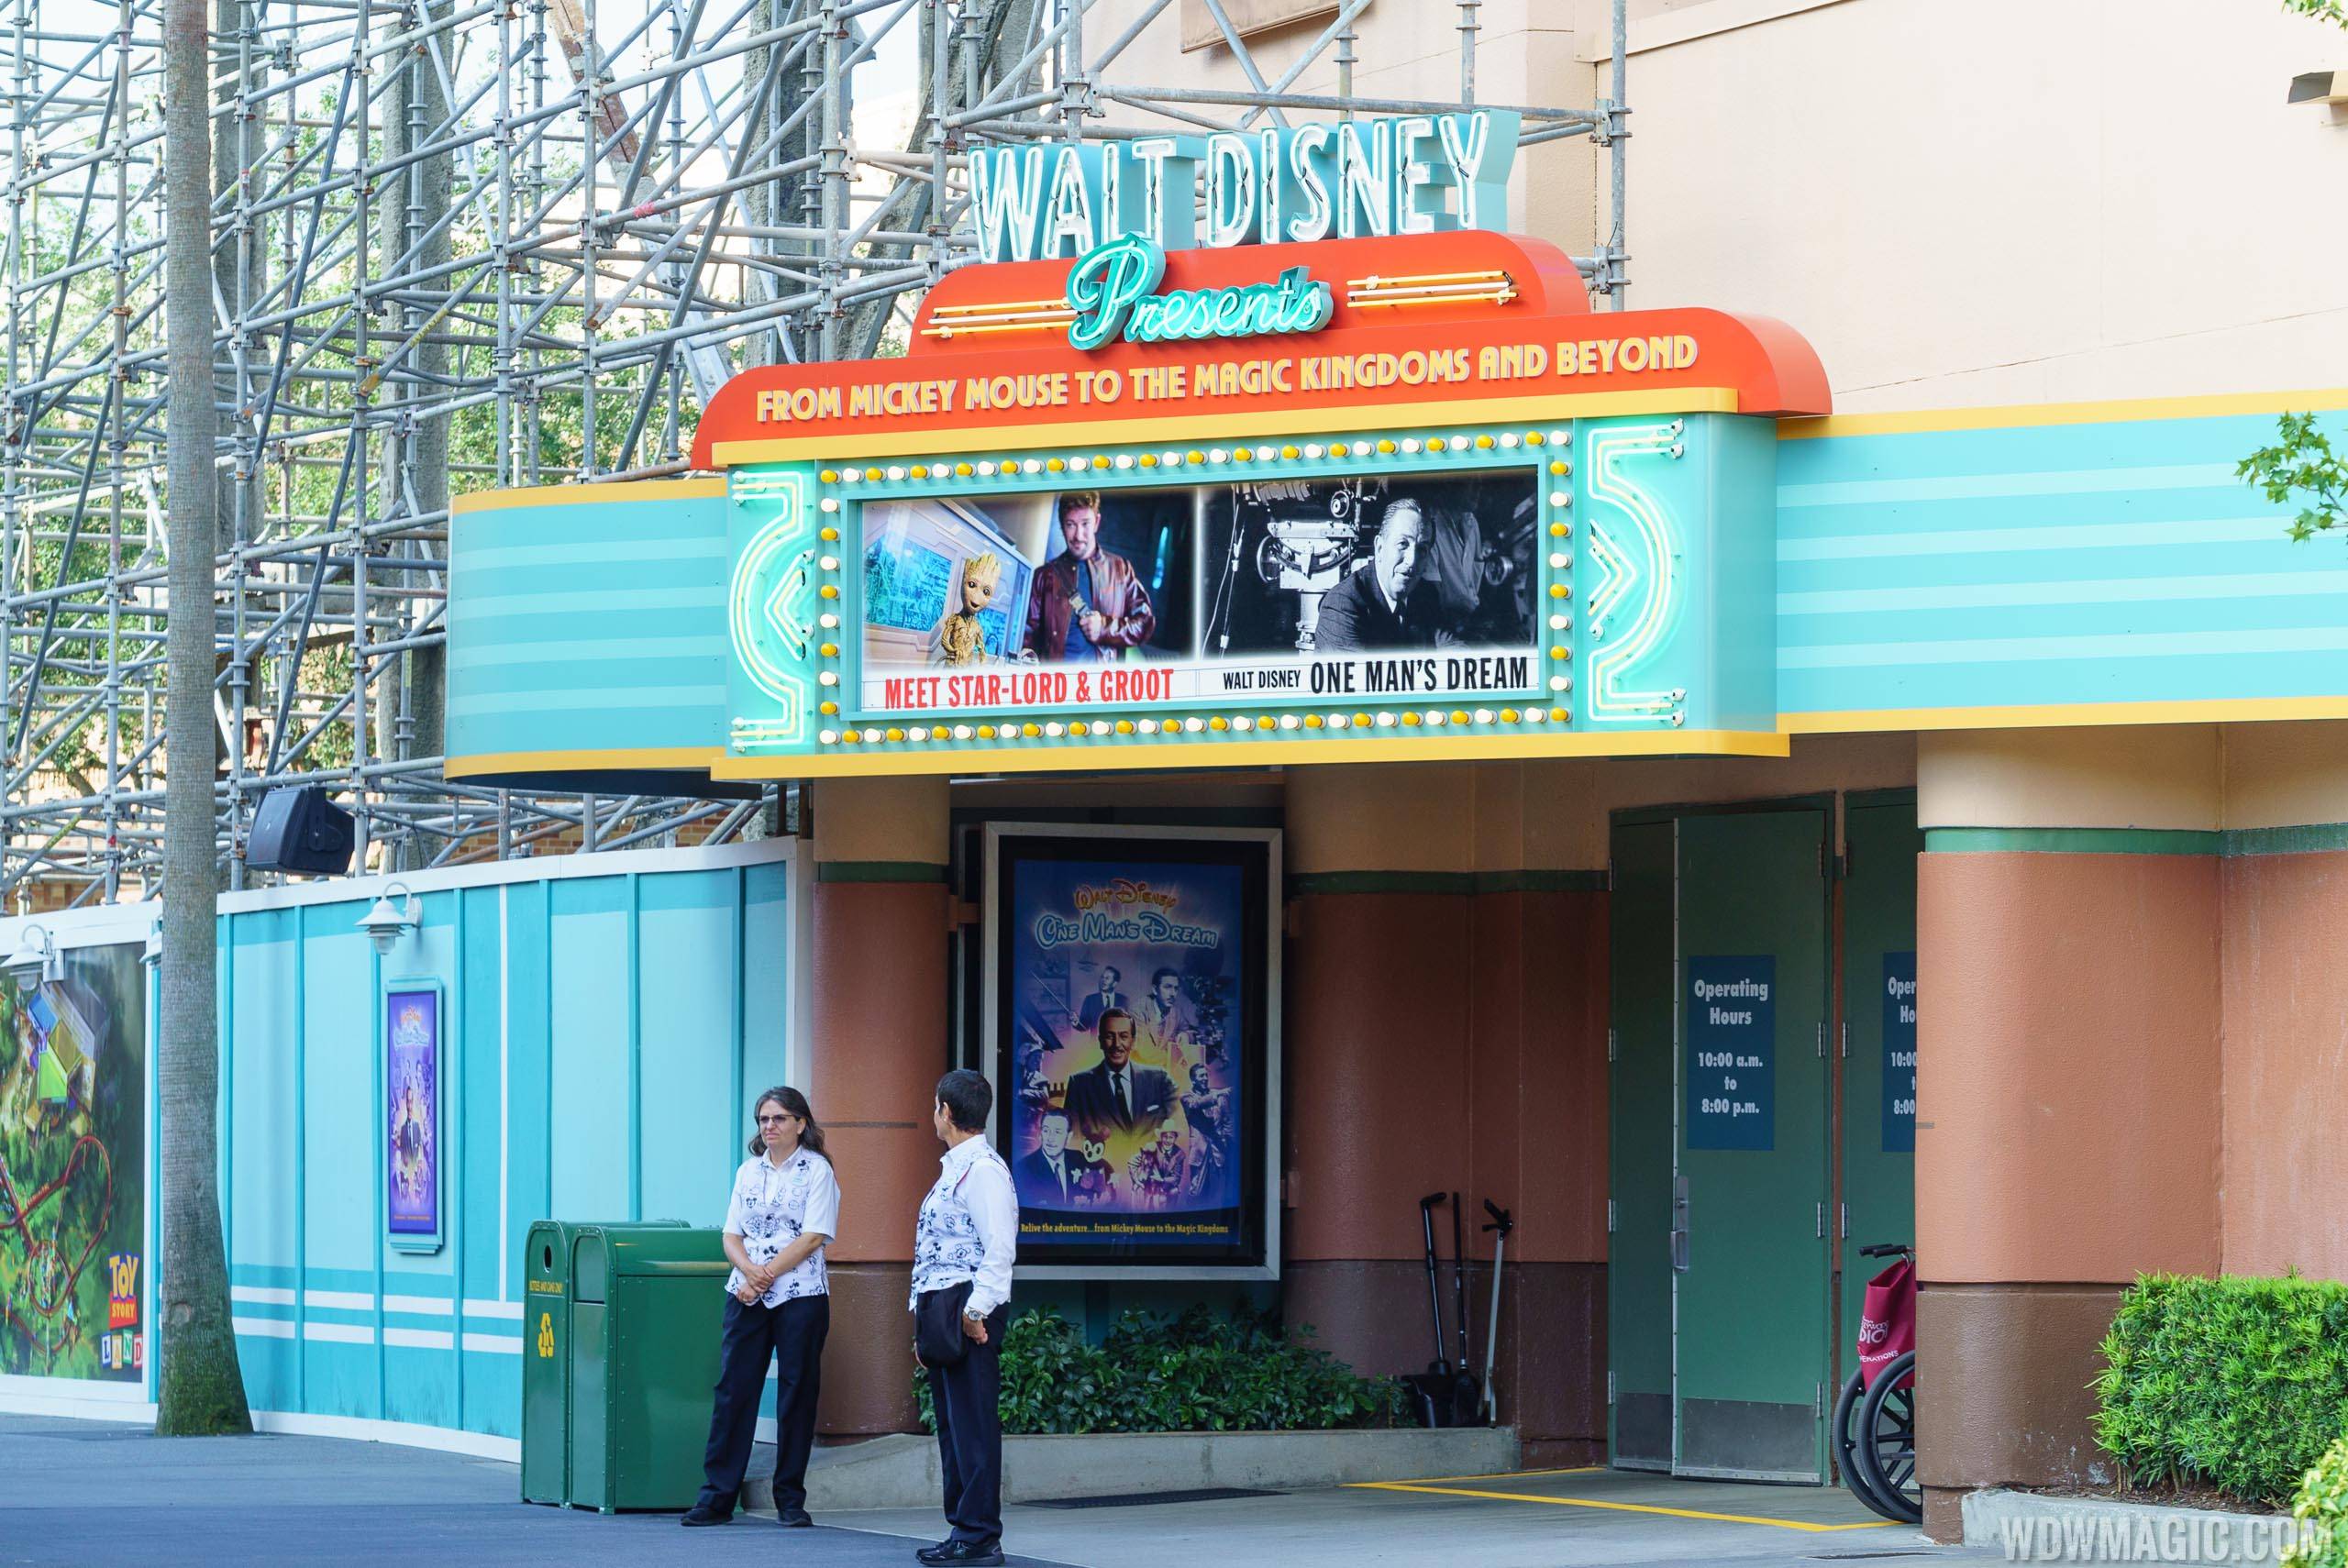 PHOTOS - One Man's Dream reopens as Walt Disney Presents